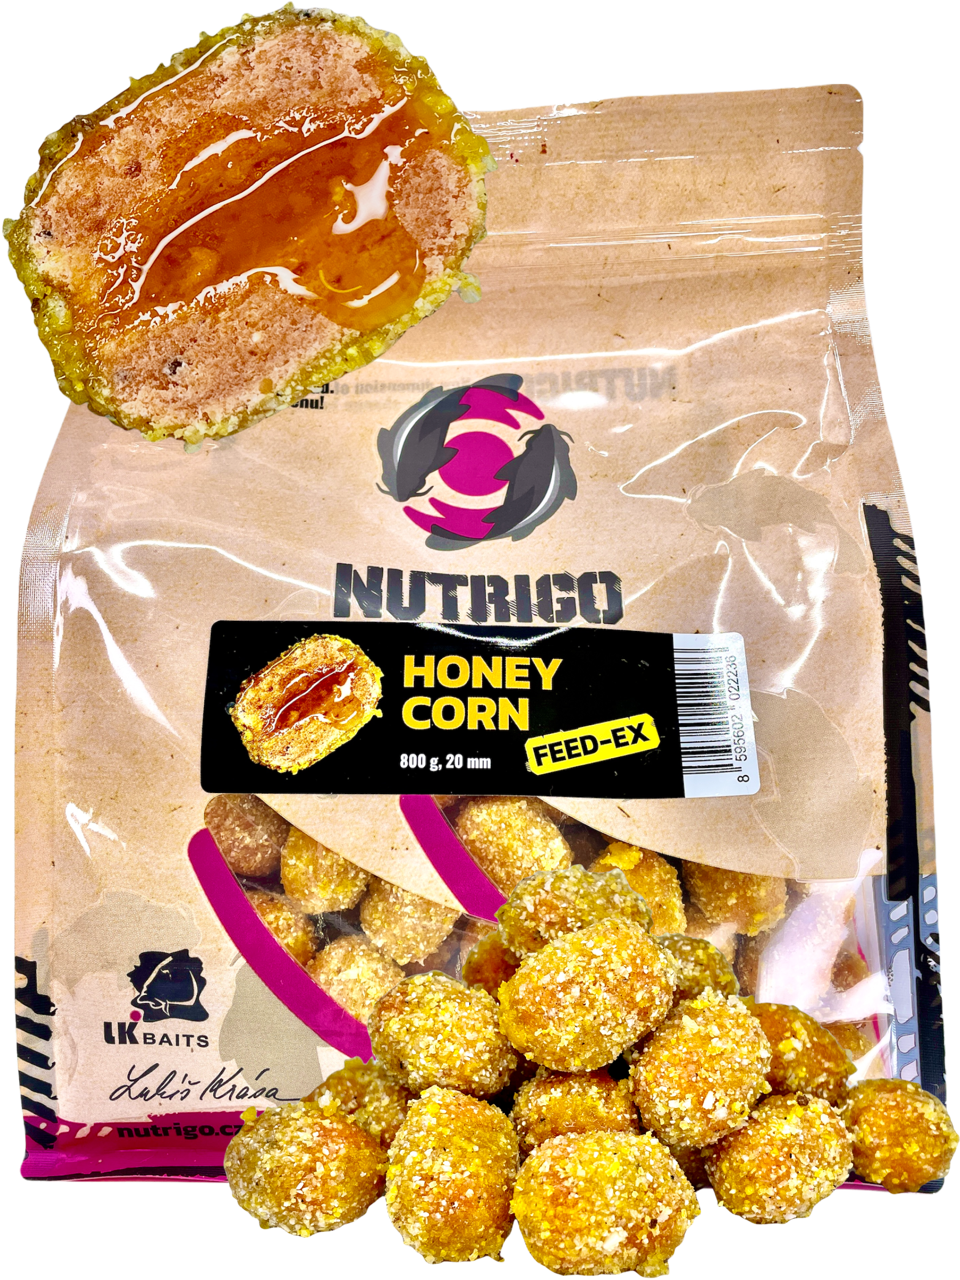 LK Baits Nutrigo FEED-EX Honey Corn 800g